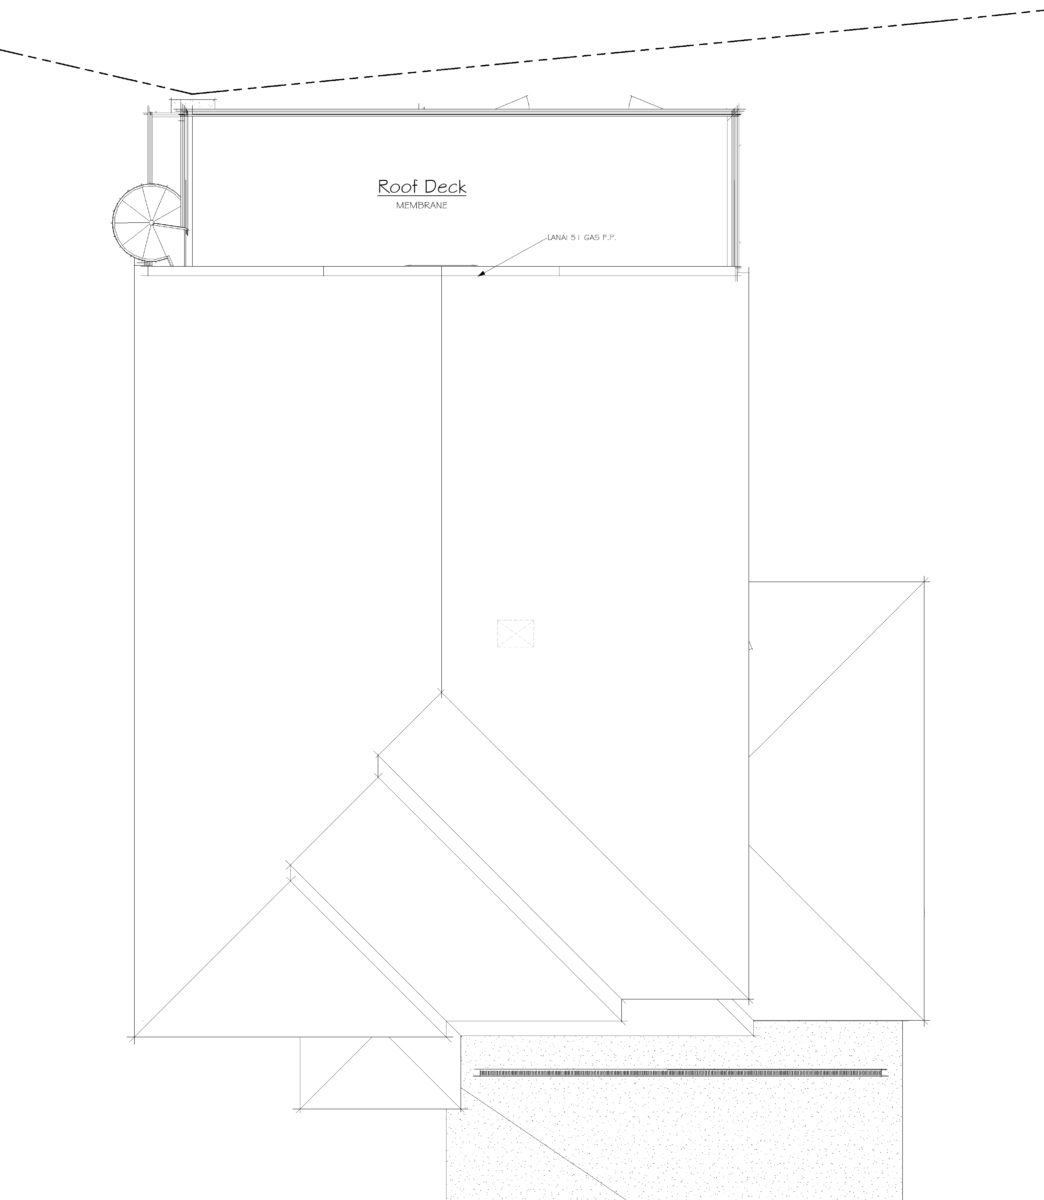 20011-05 Kerker Residence, Issaquah - Floor Plan - Marketing, Roof Deck